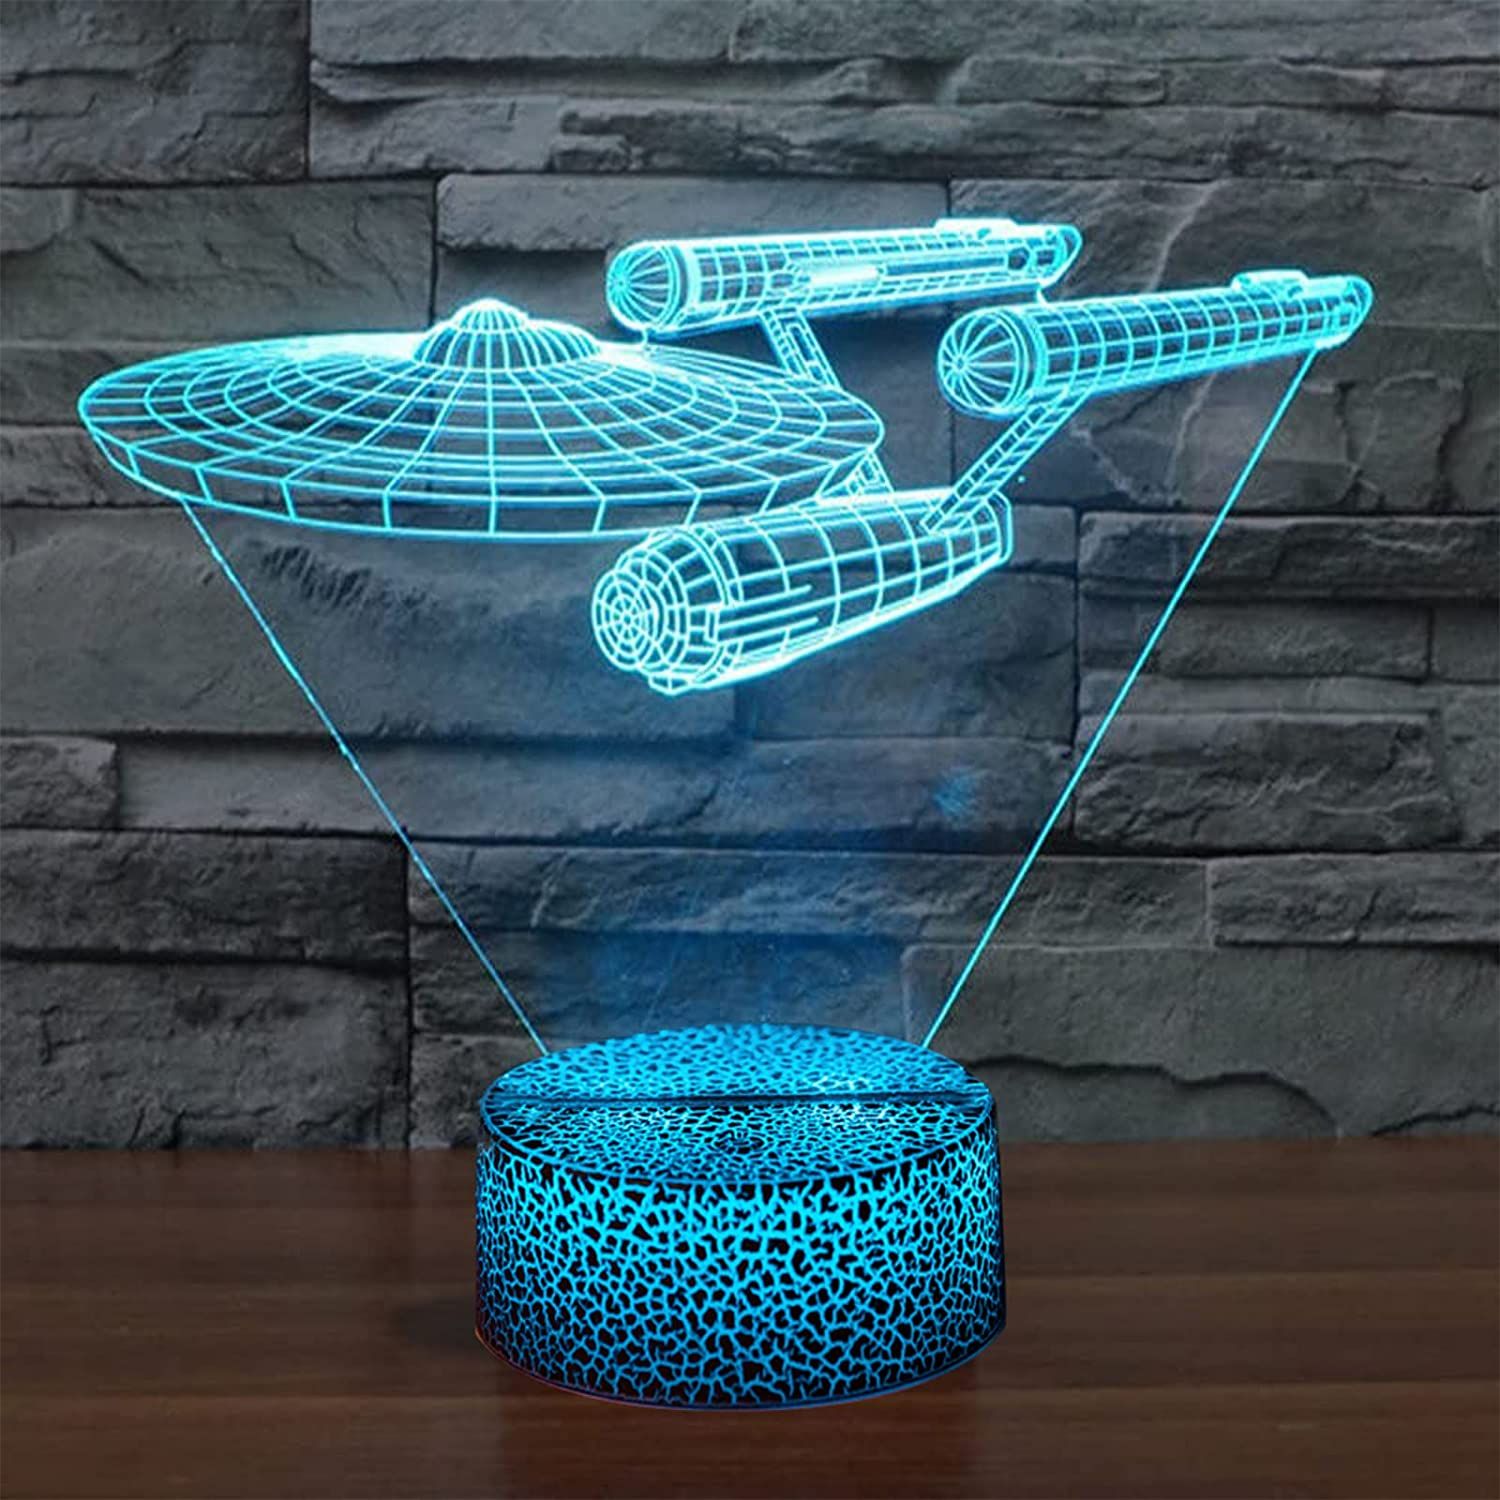 3D nightlight is one of the best accessories for Star Trek fans